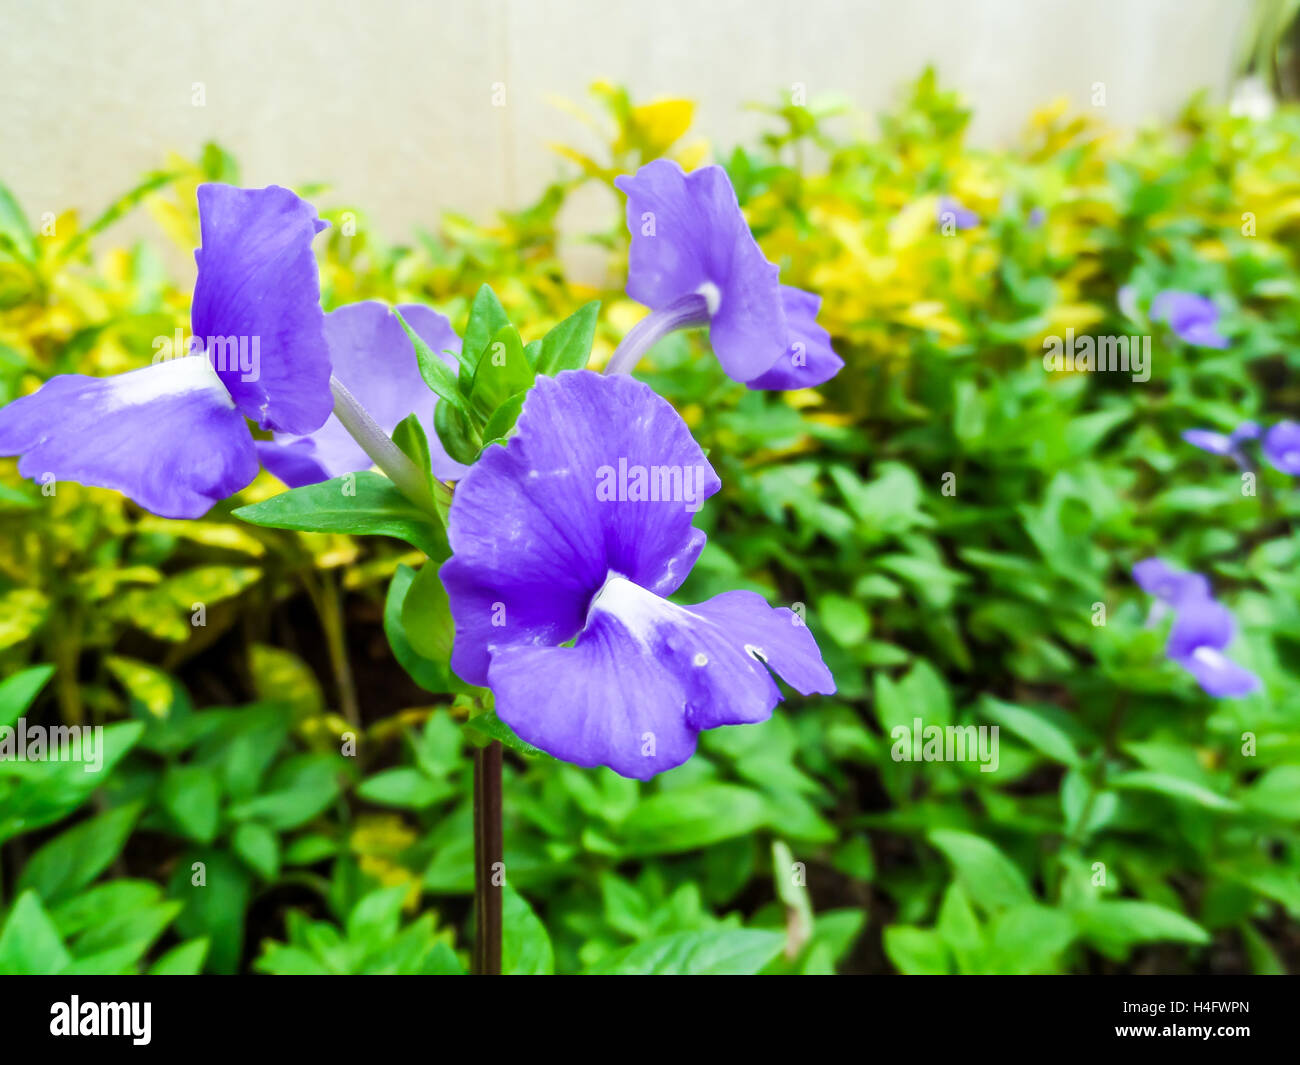 Otacanthus caeruleus the name of purple white flower ,Thailand call Blue Hawai Stock Photo